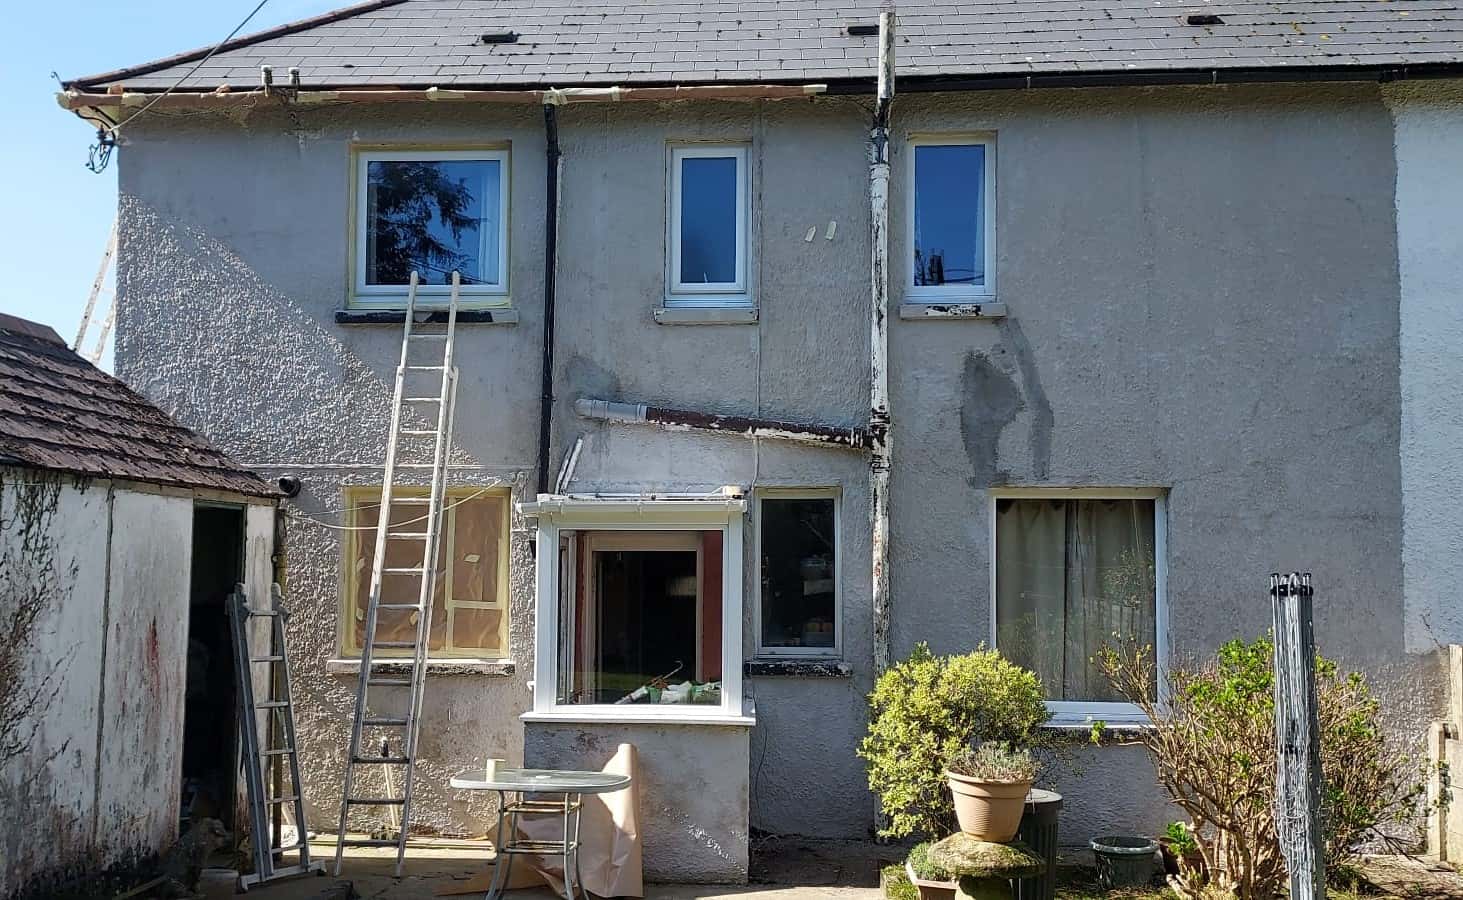 An ex council house in Callington, Cornwall, needing a paint job